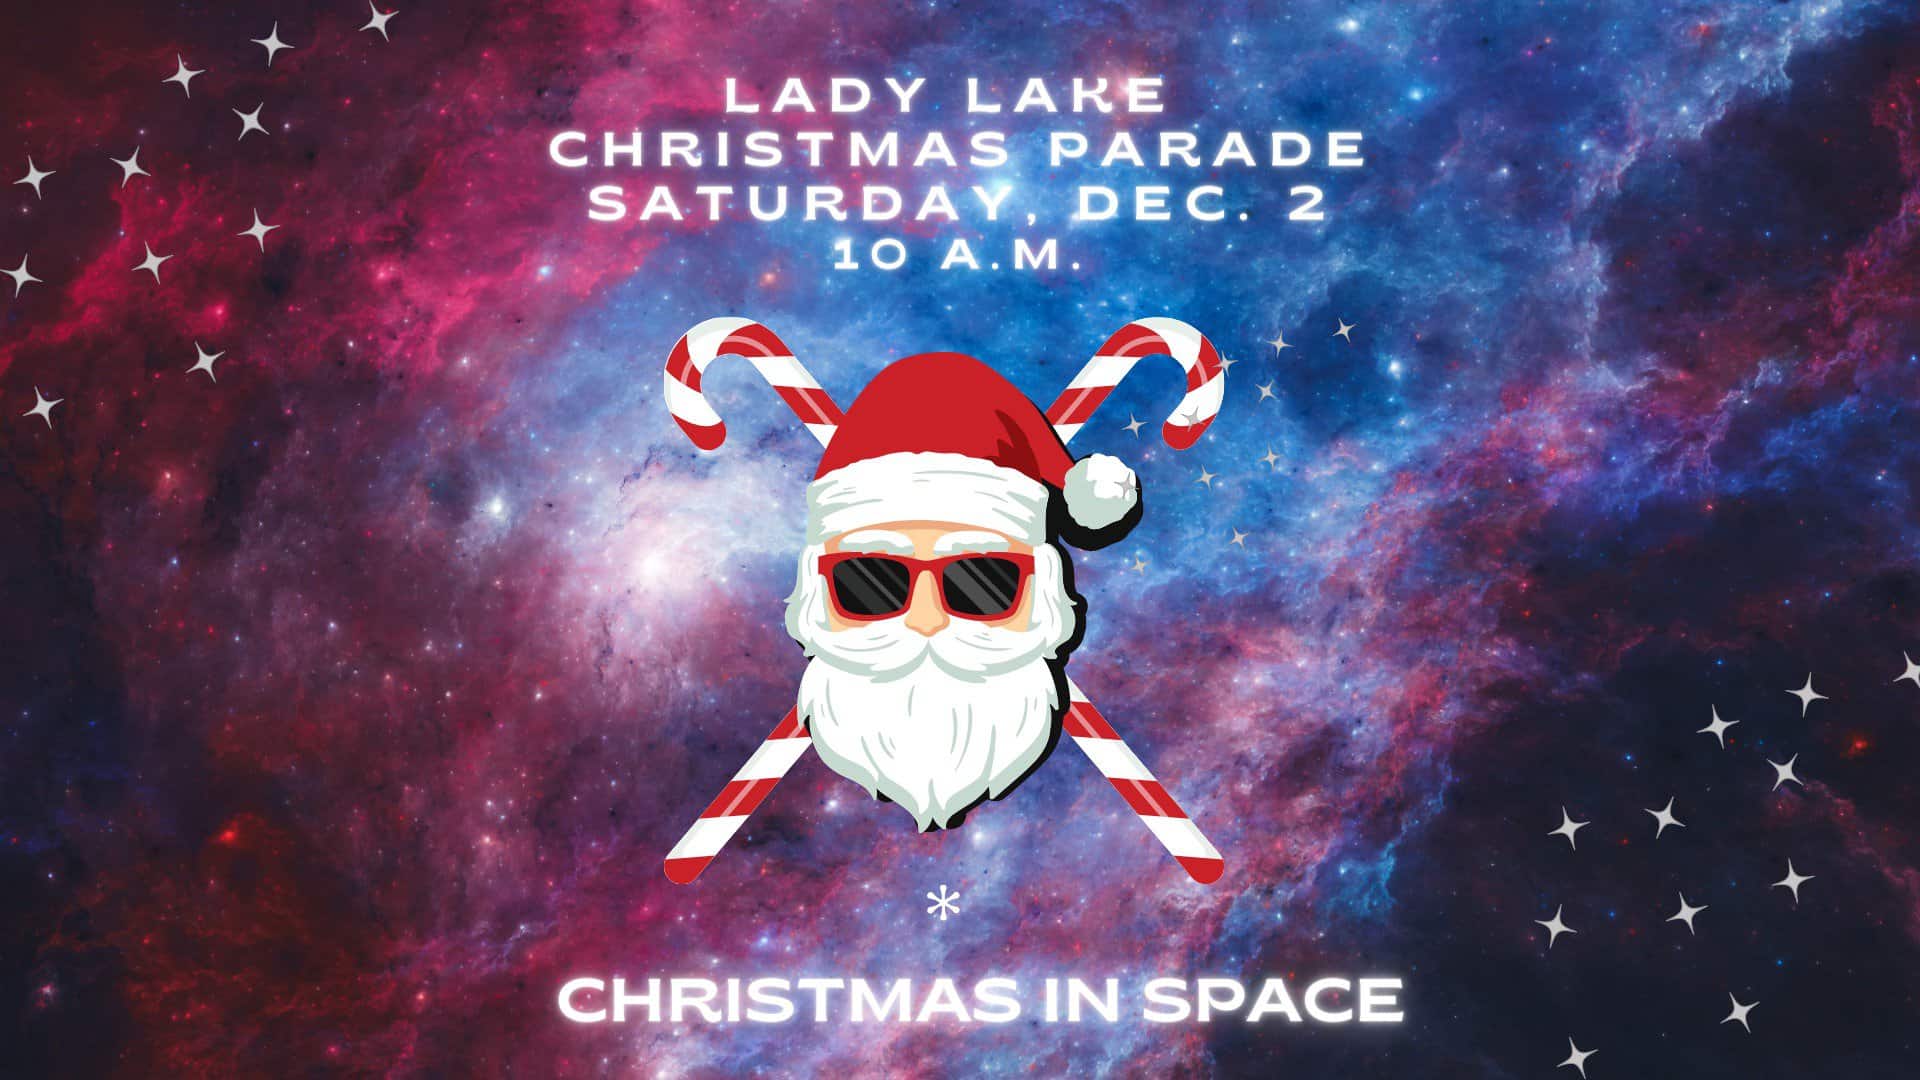 Lady Lake Christmas Parade promotional flyer. 